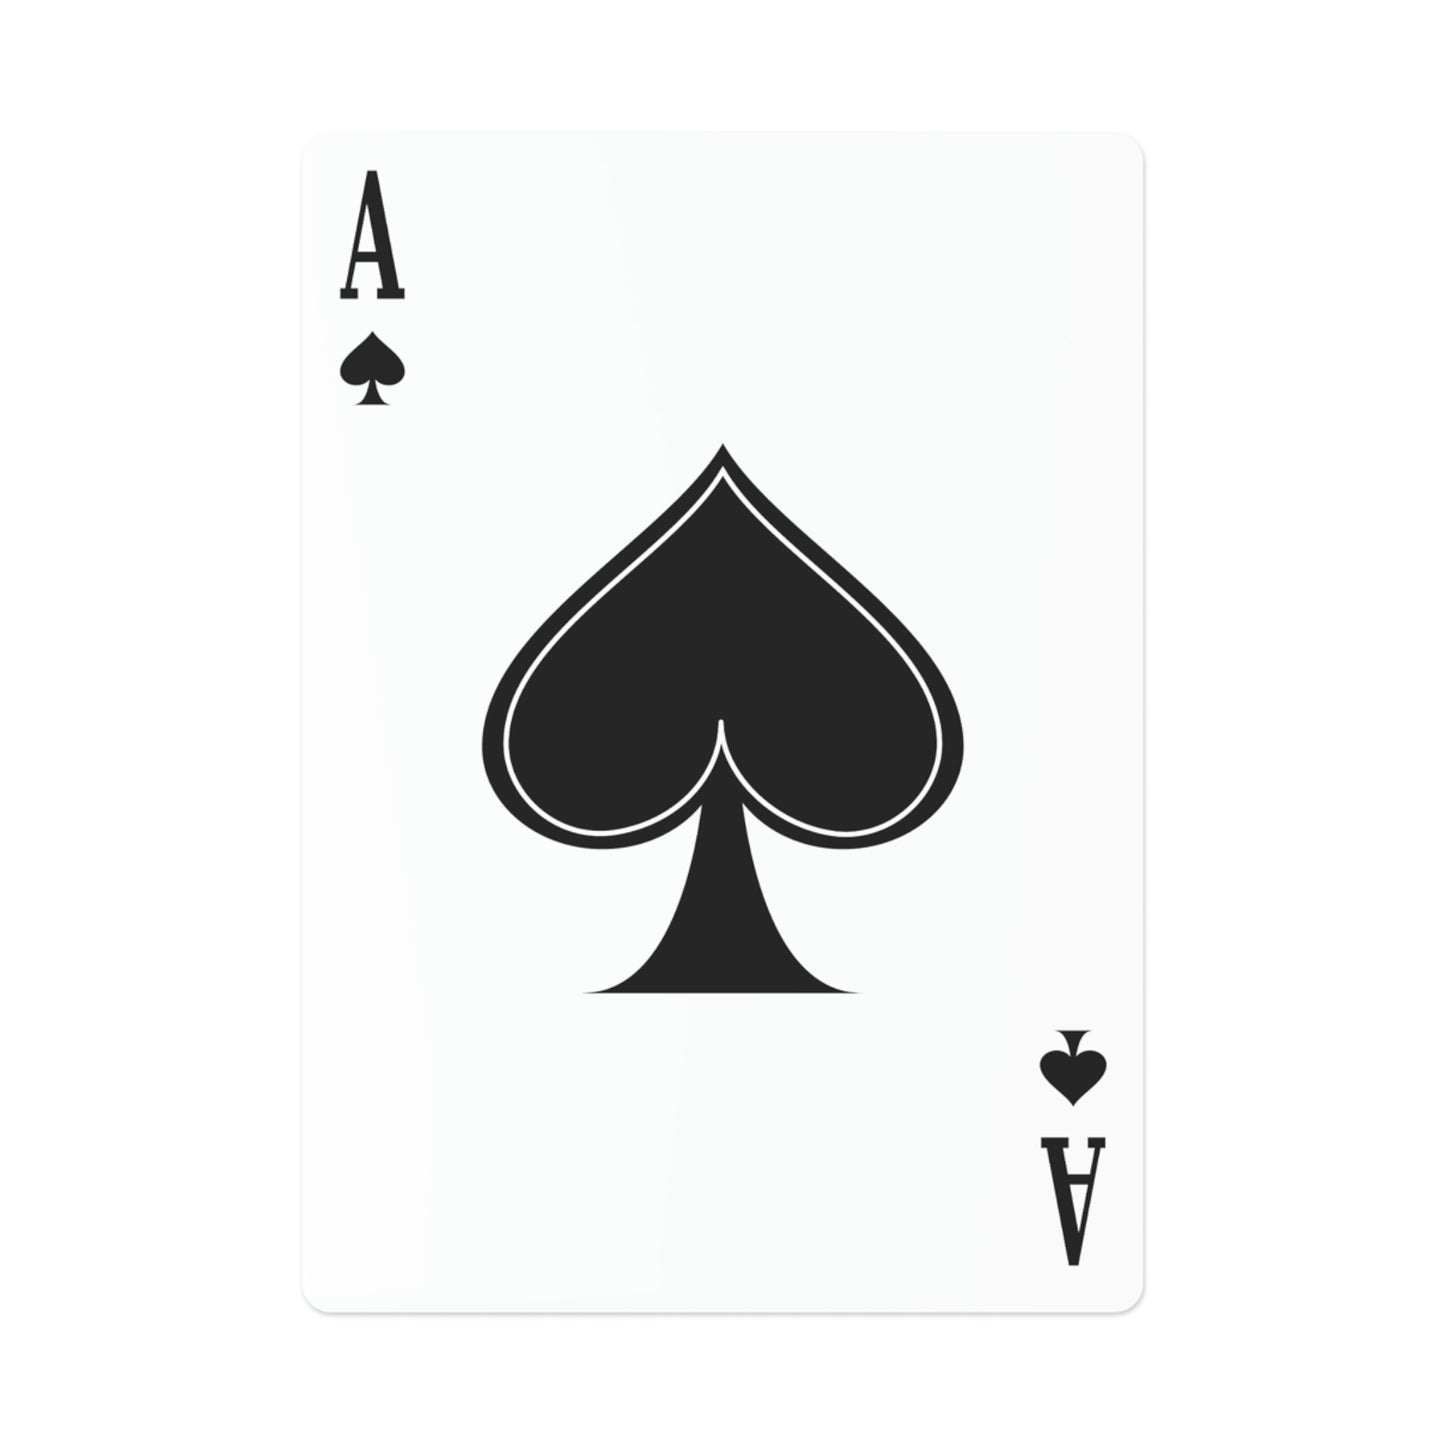 Absaroka War Chief - Playing Cards